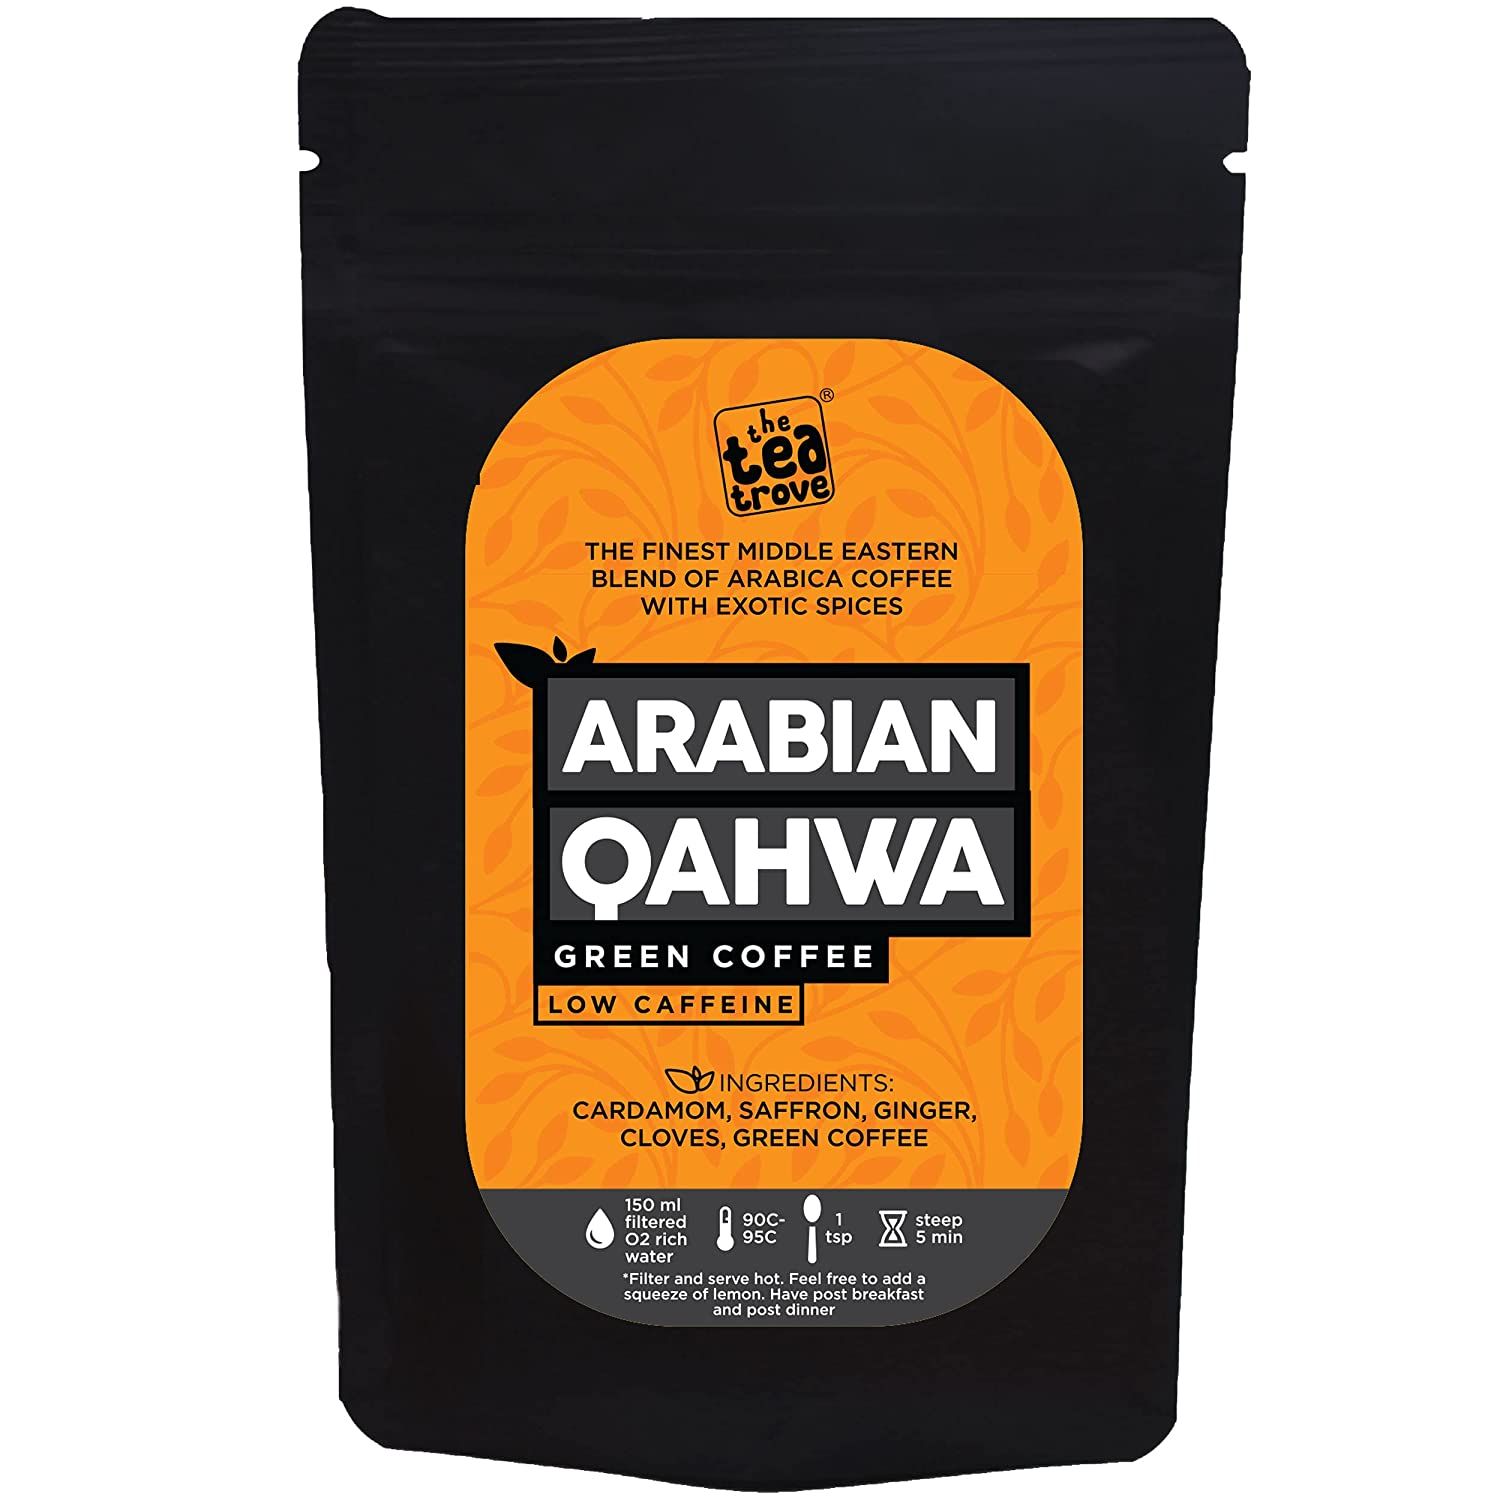 The Tea Trove Arabian Qahwa Green Arabica Coffee Image